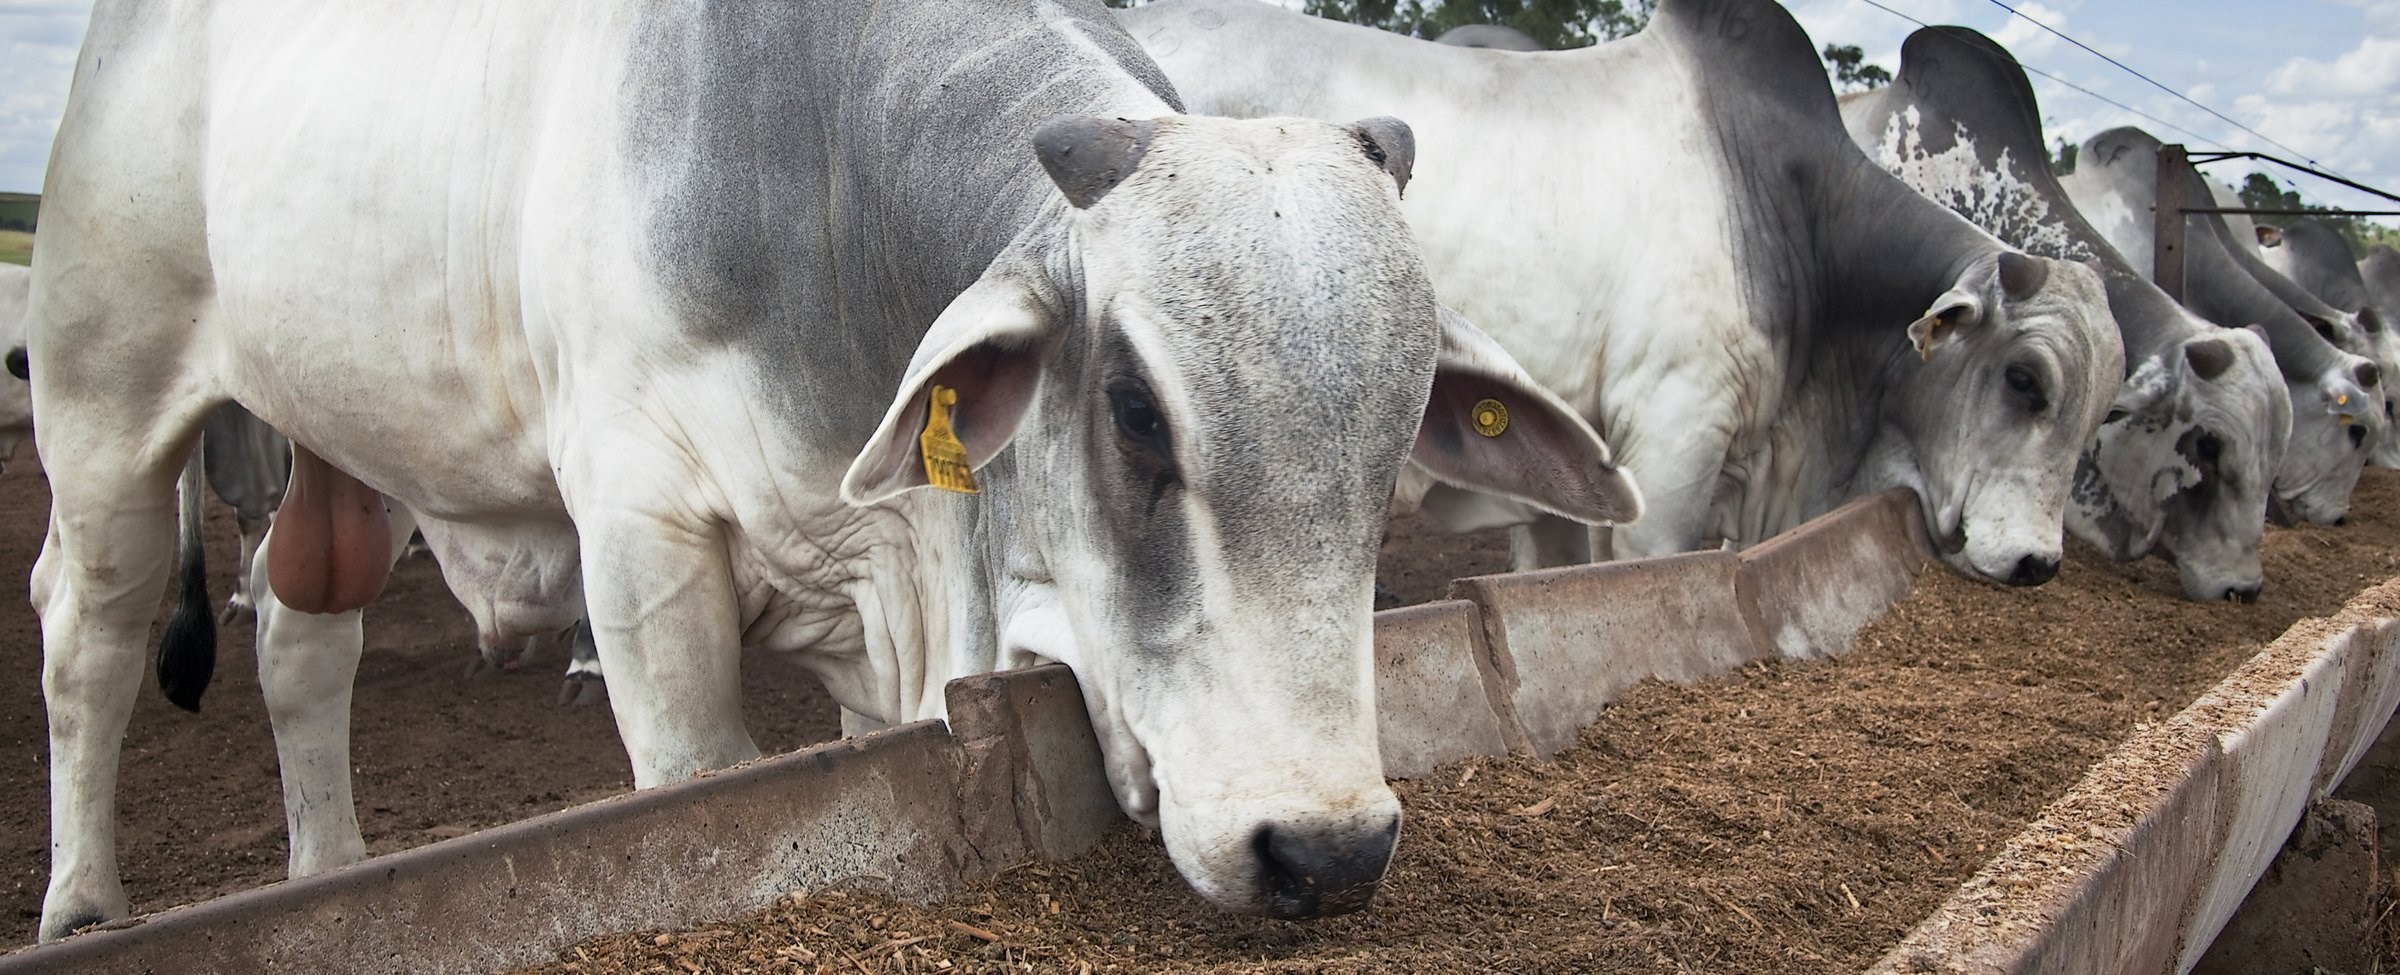 Brahman bulls eating at a feedlot in Brazil